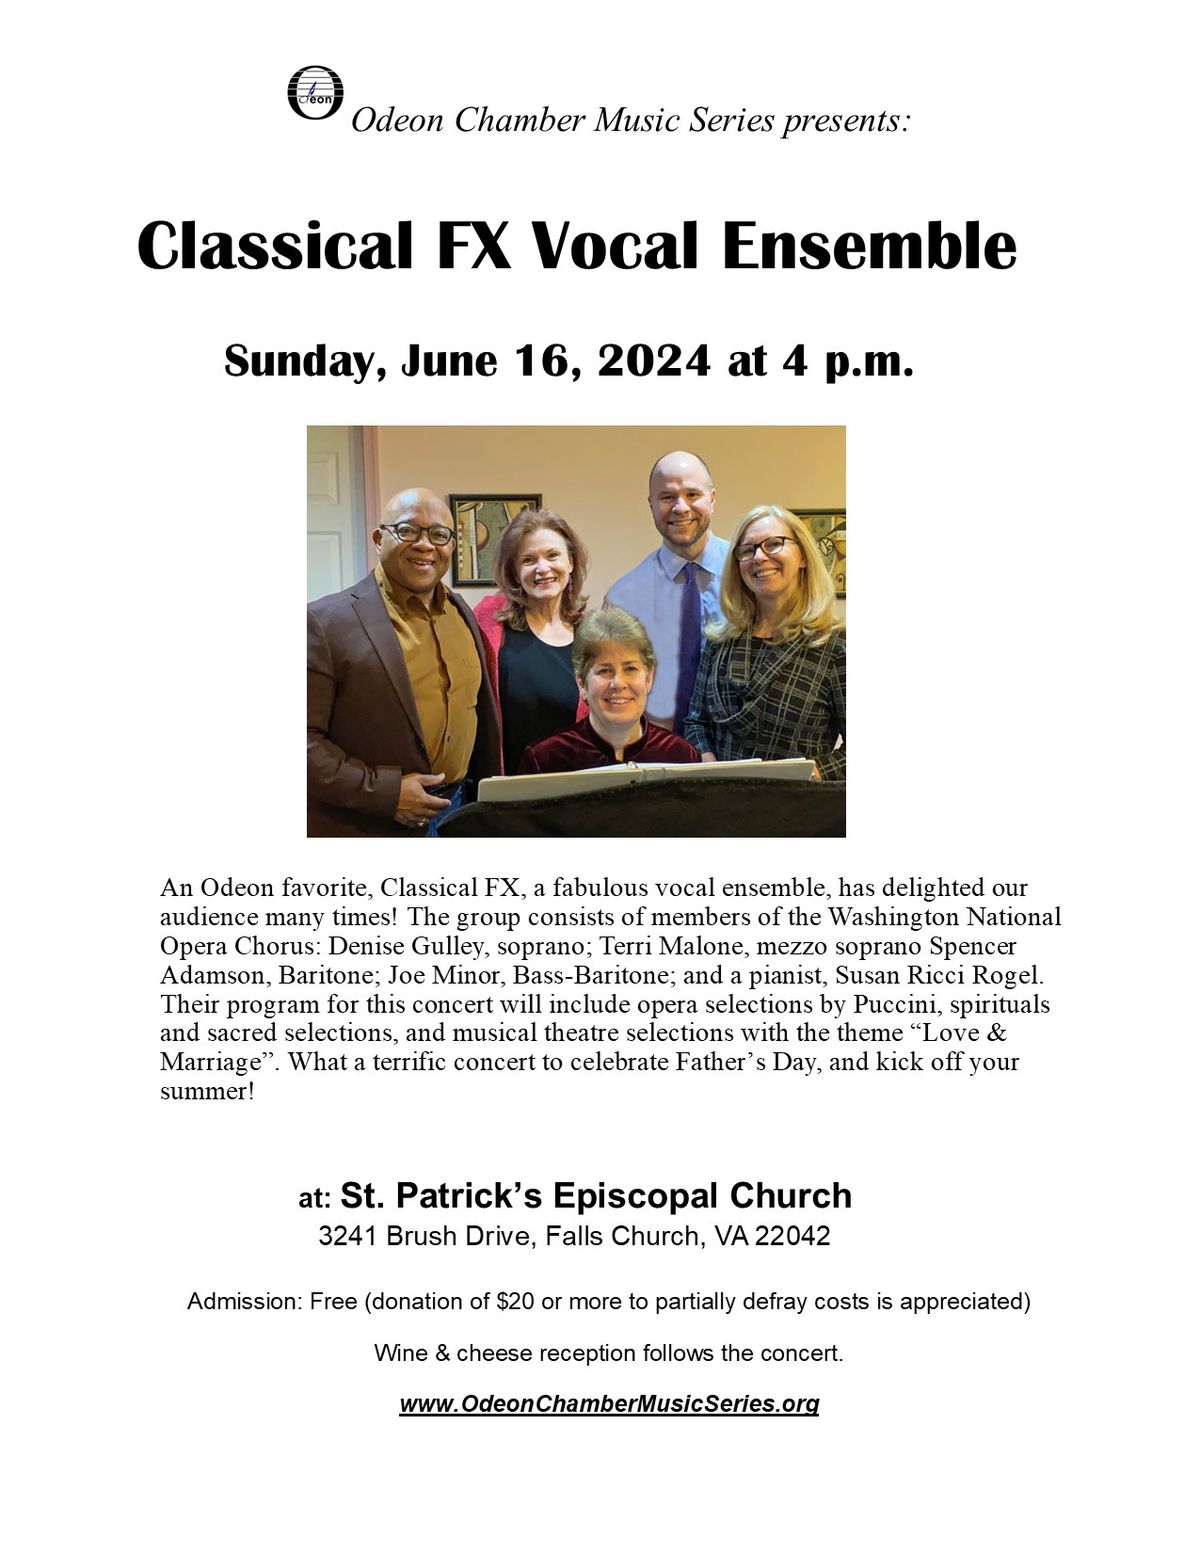 Classical FX Vocal Ensemble 